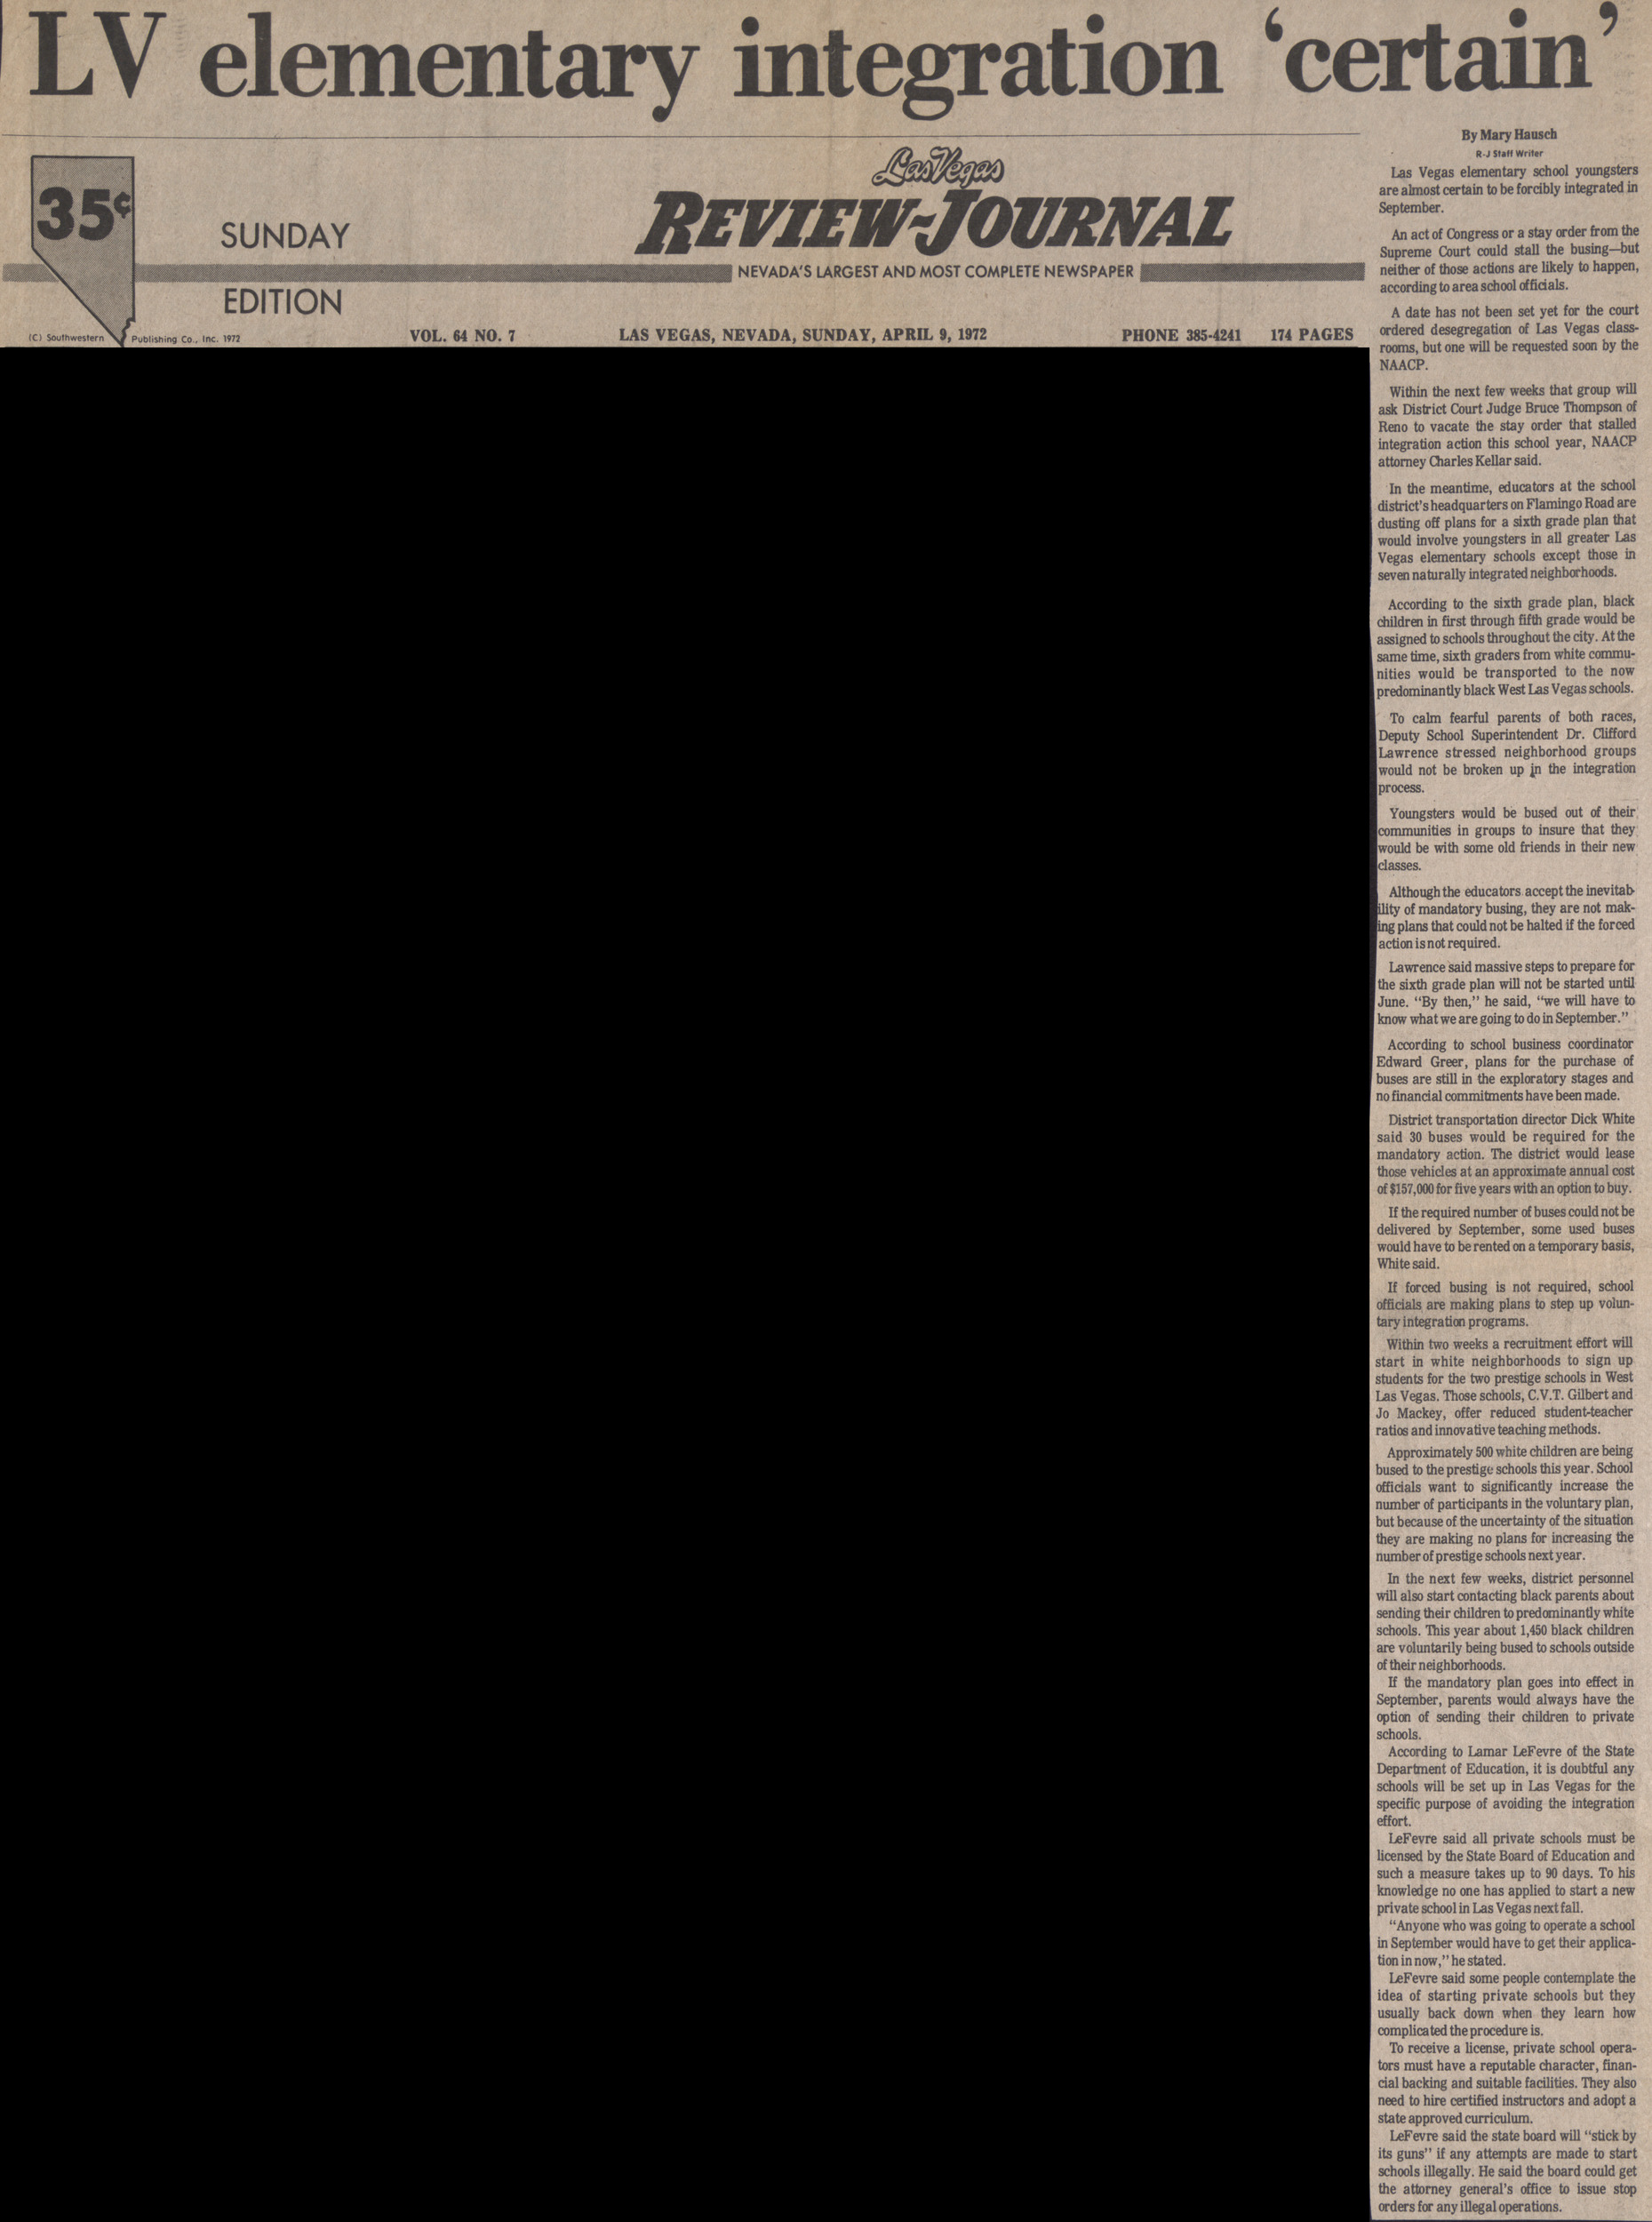 Newspaper clipping, LV elementary integration 'certain', Las Vegas Review-Journal, April 9, 1972